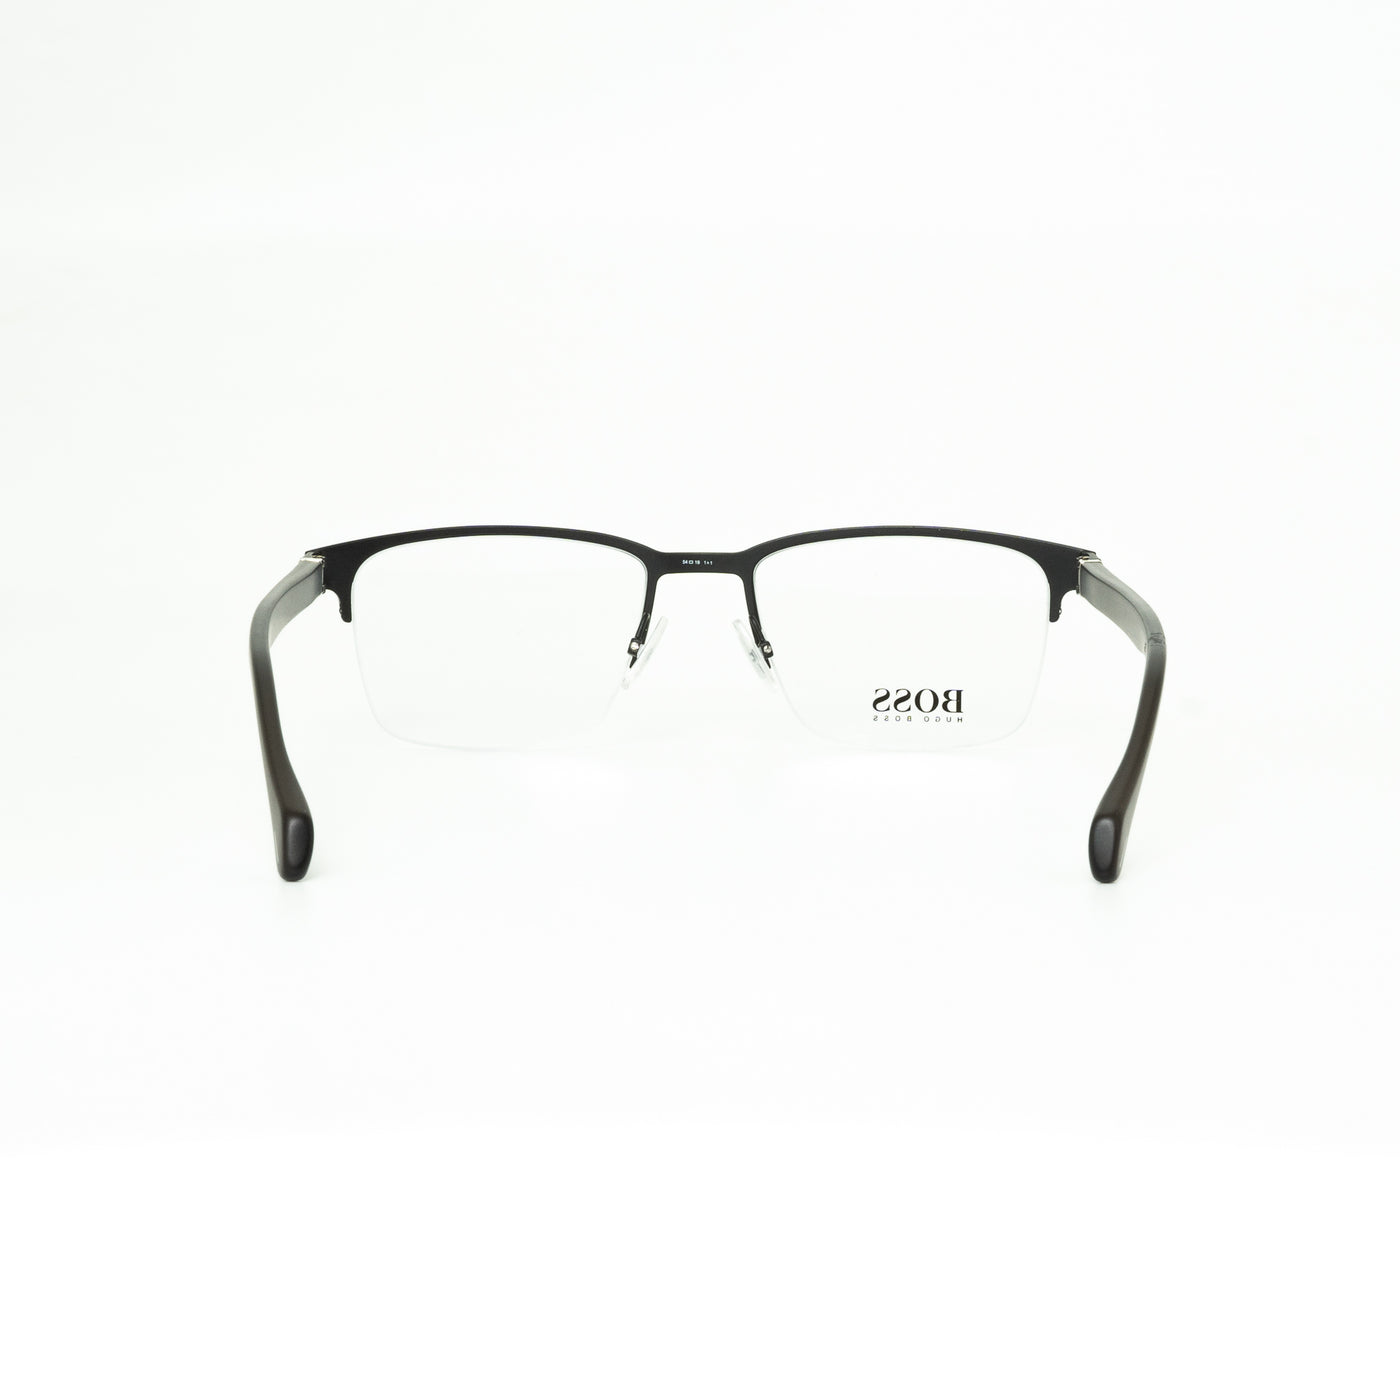 Hugo Boss HB112000354 | Eyeglasses - Vision Express Optical Philippines